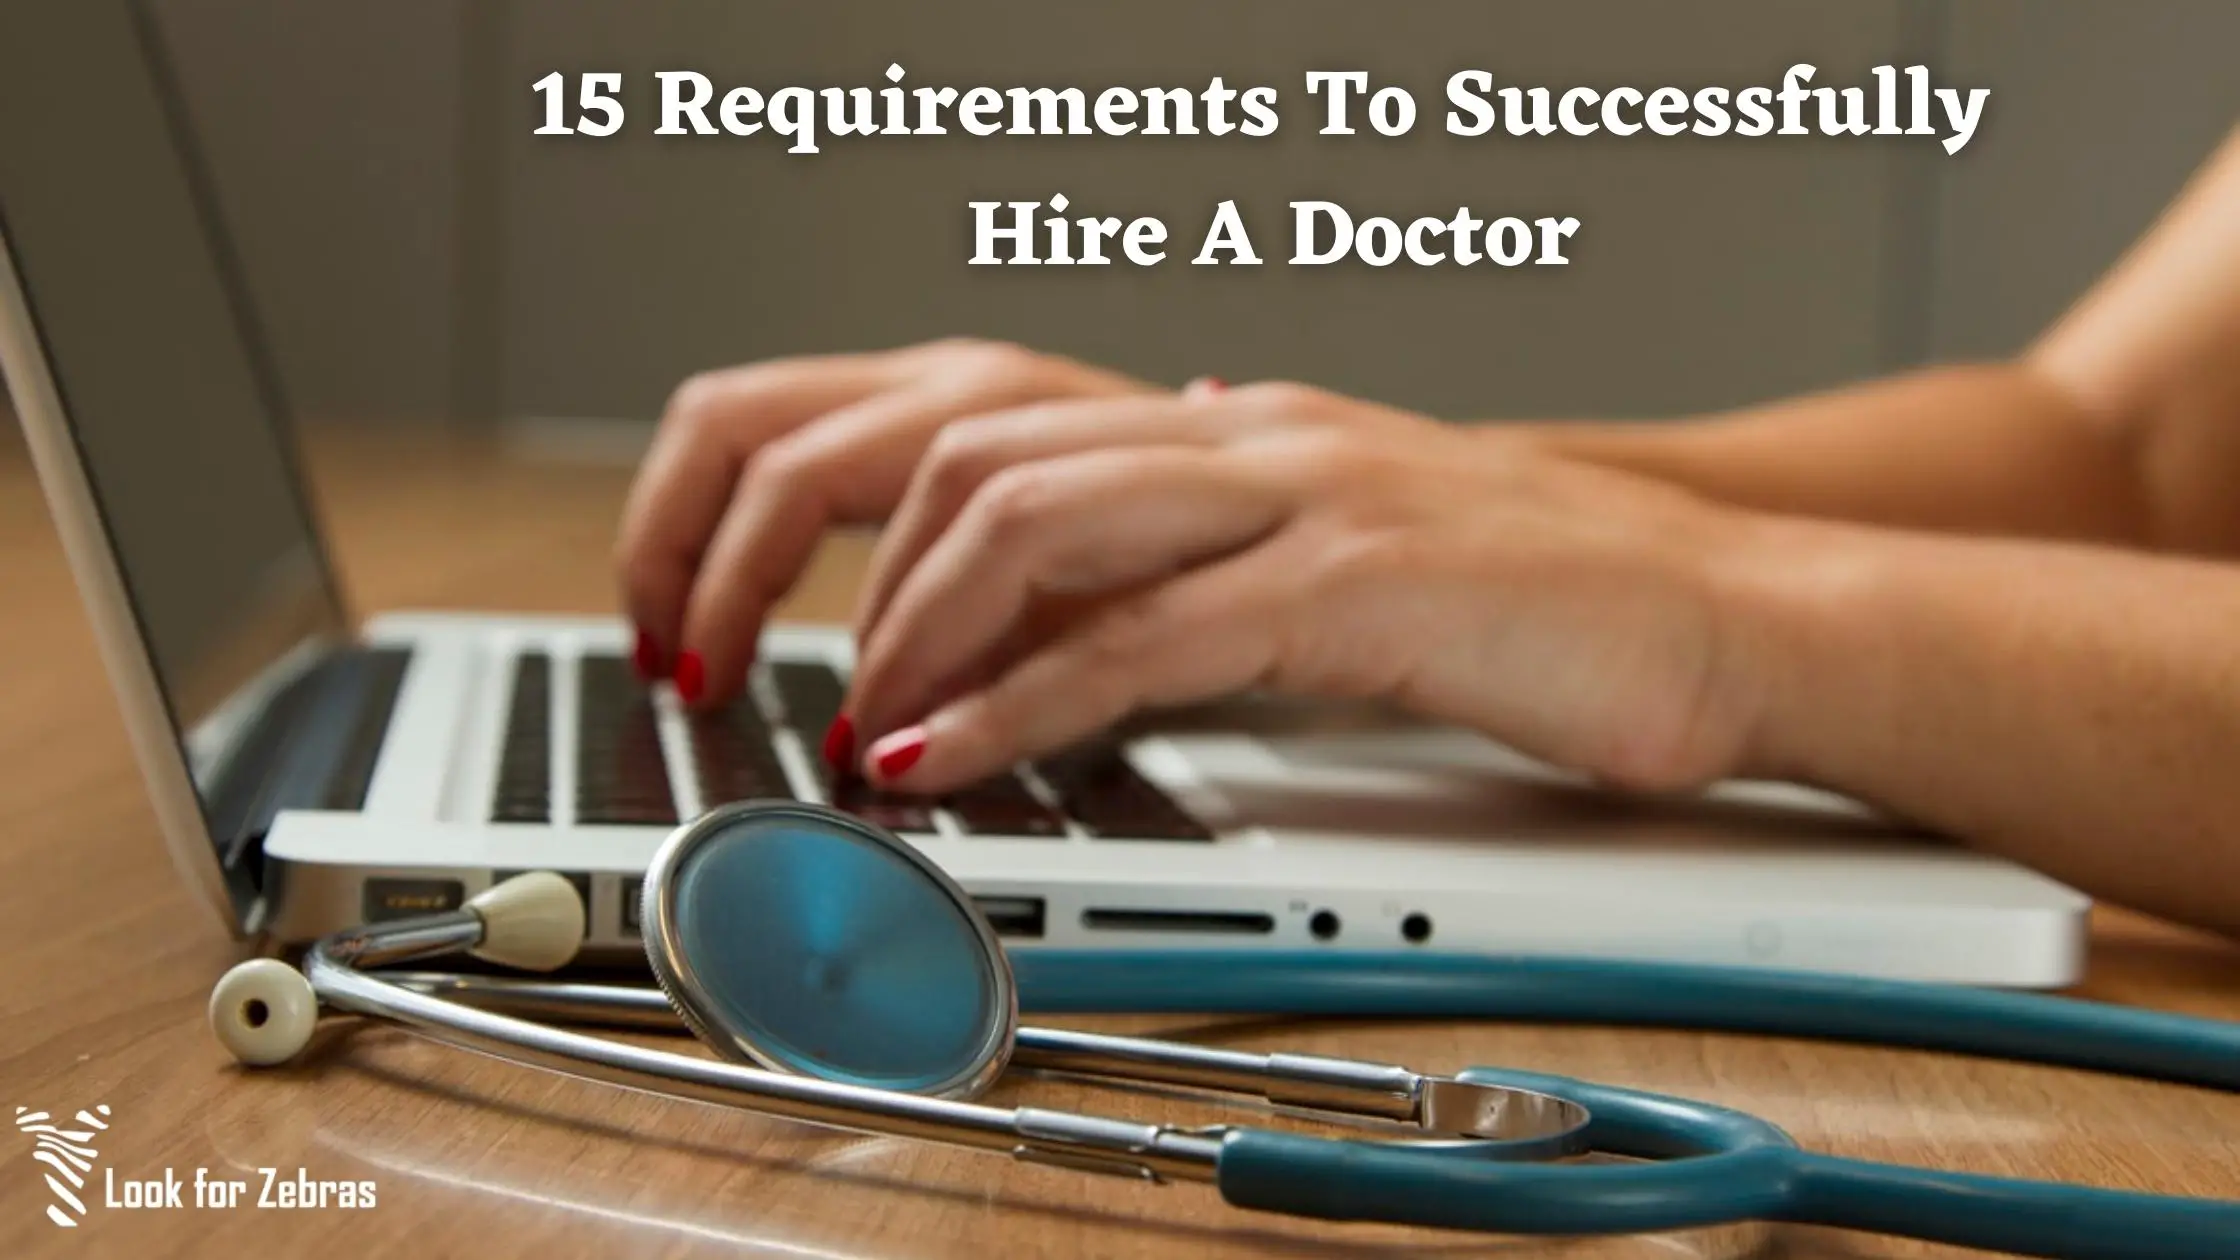 Requirements for Hiring Doctors